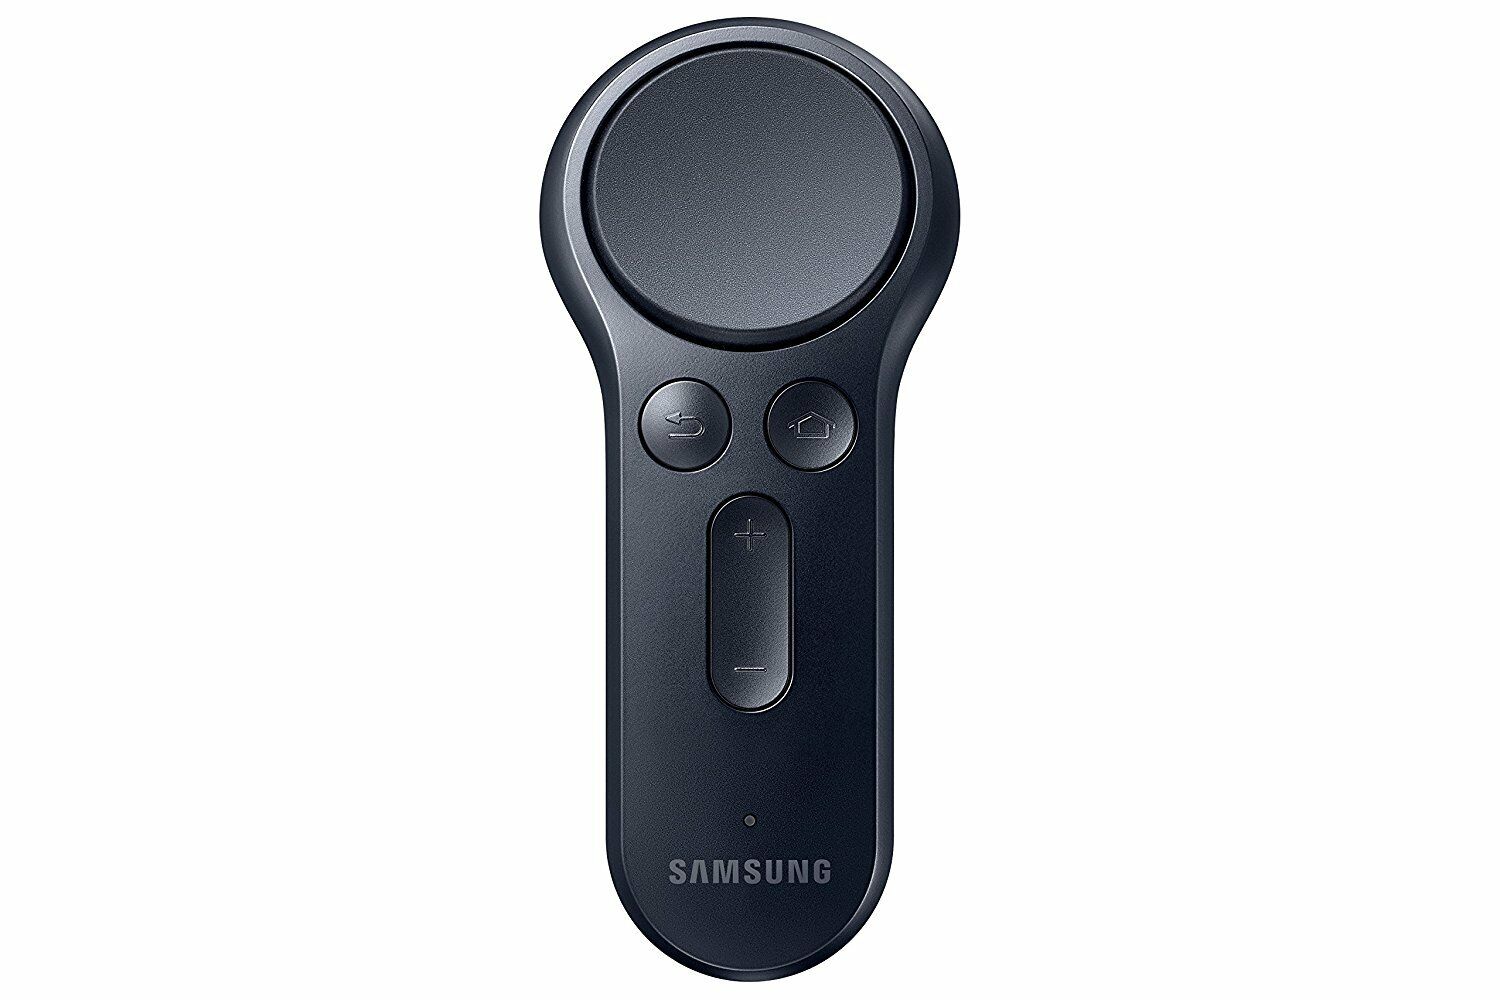 Samsung Gear Vr Controller - Black